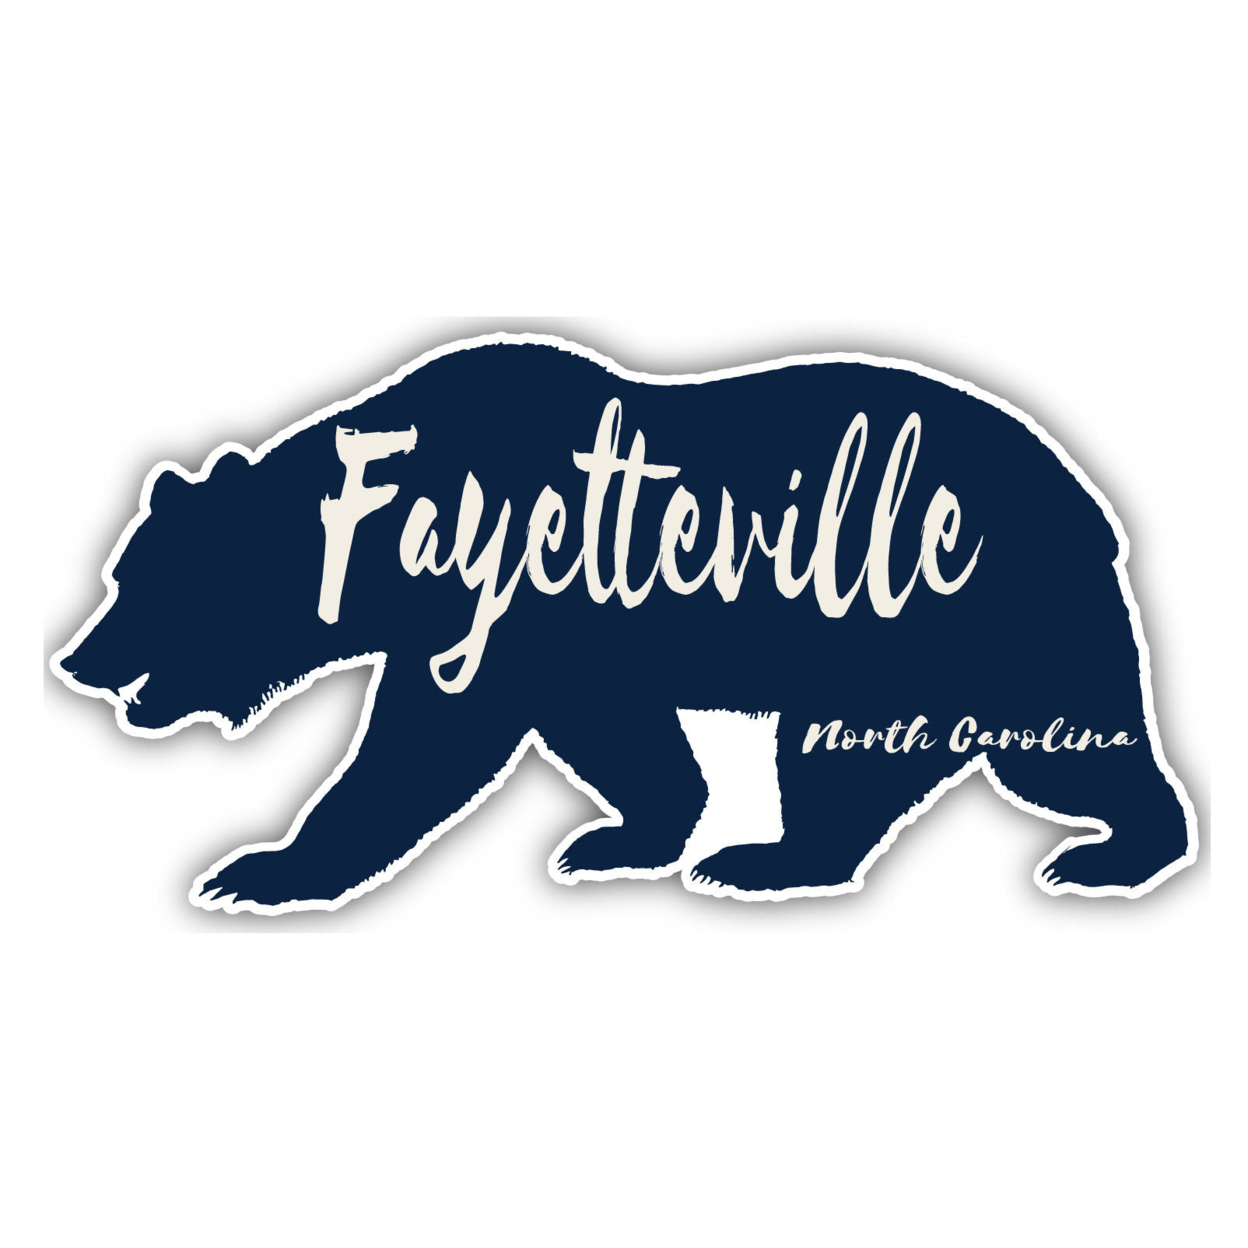 Fayetteville North Carolina Souvenir Decorative Stickers (Choose Theme And Size) - Single Unit, 10-Inch, Camp Life